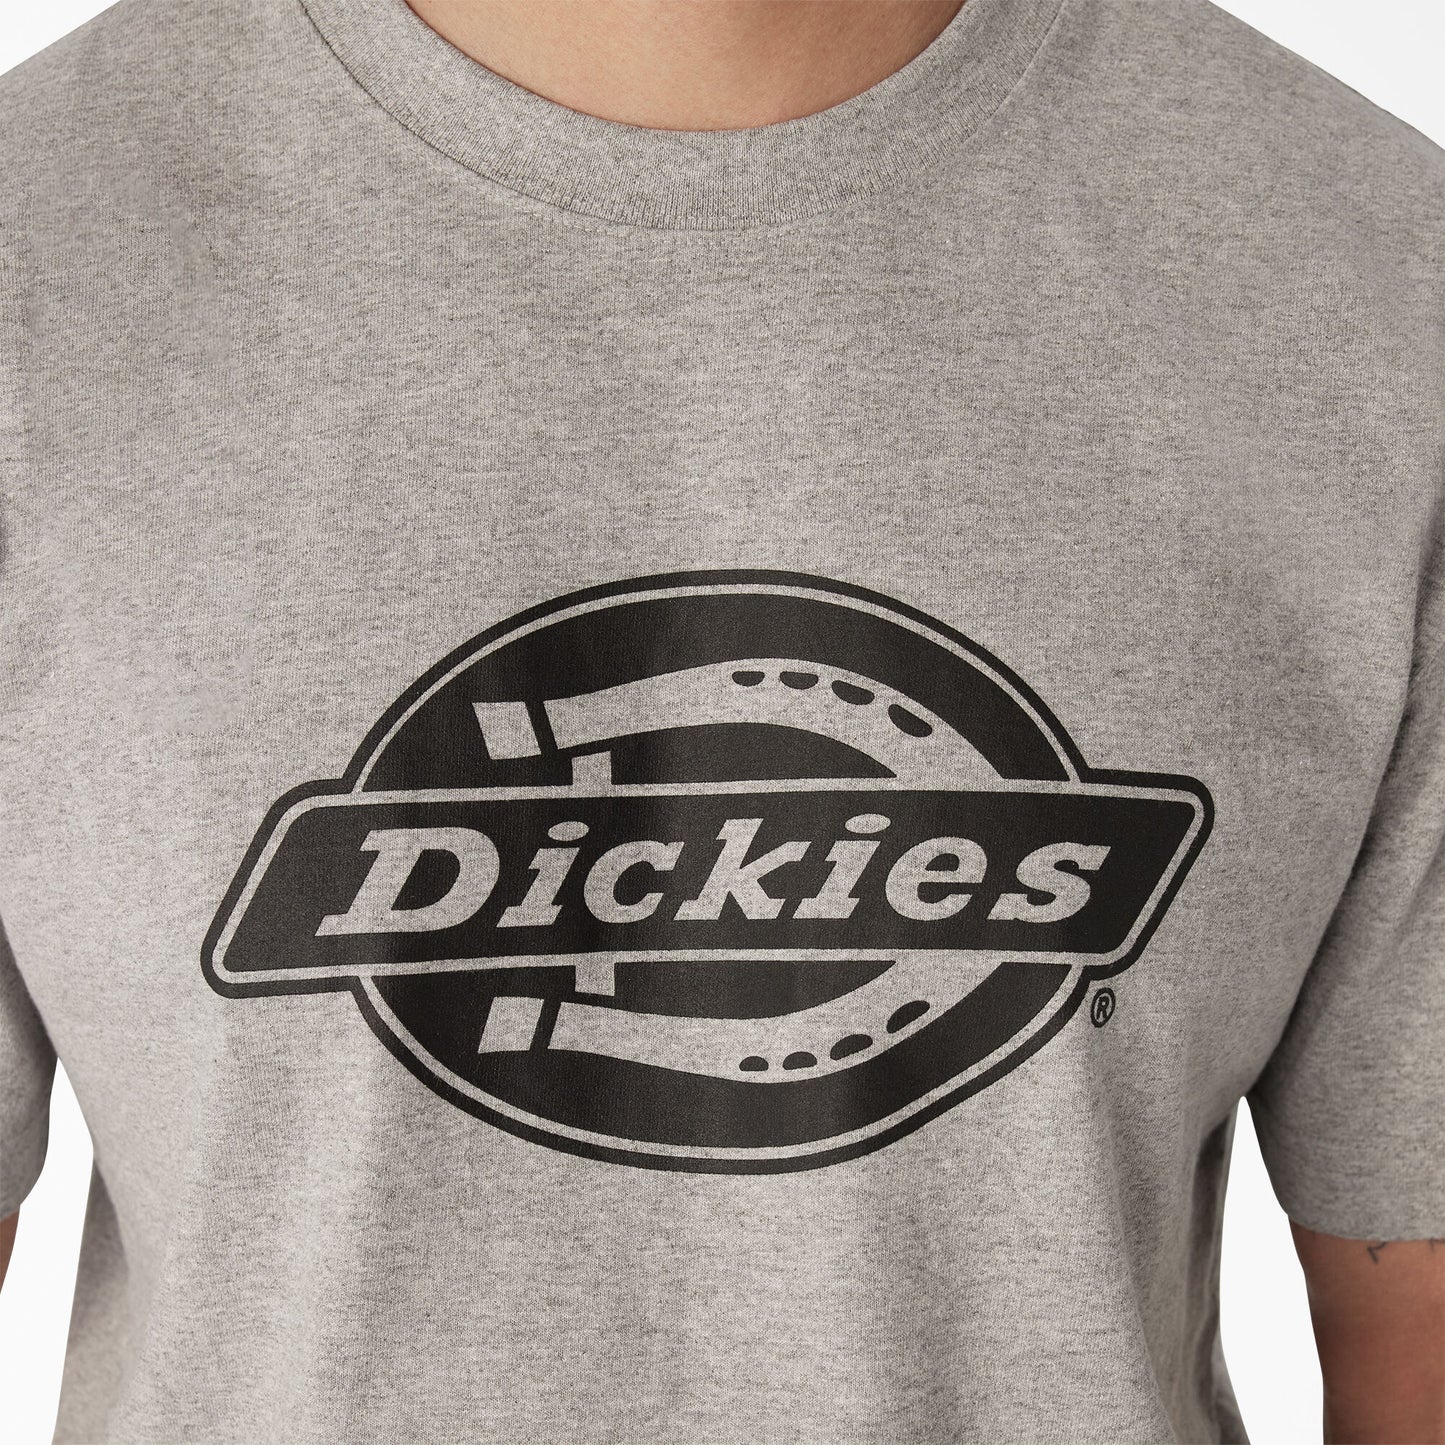 Dickies heavyweight logo tee